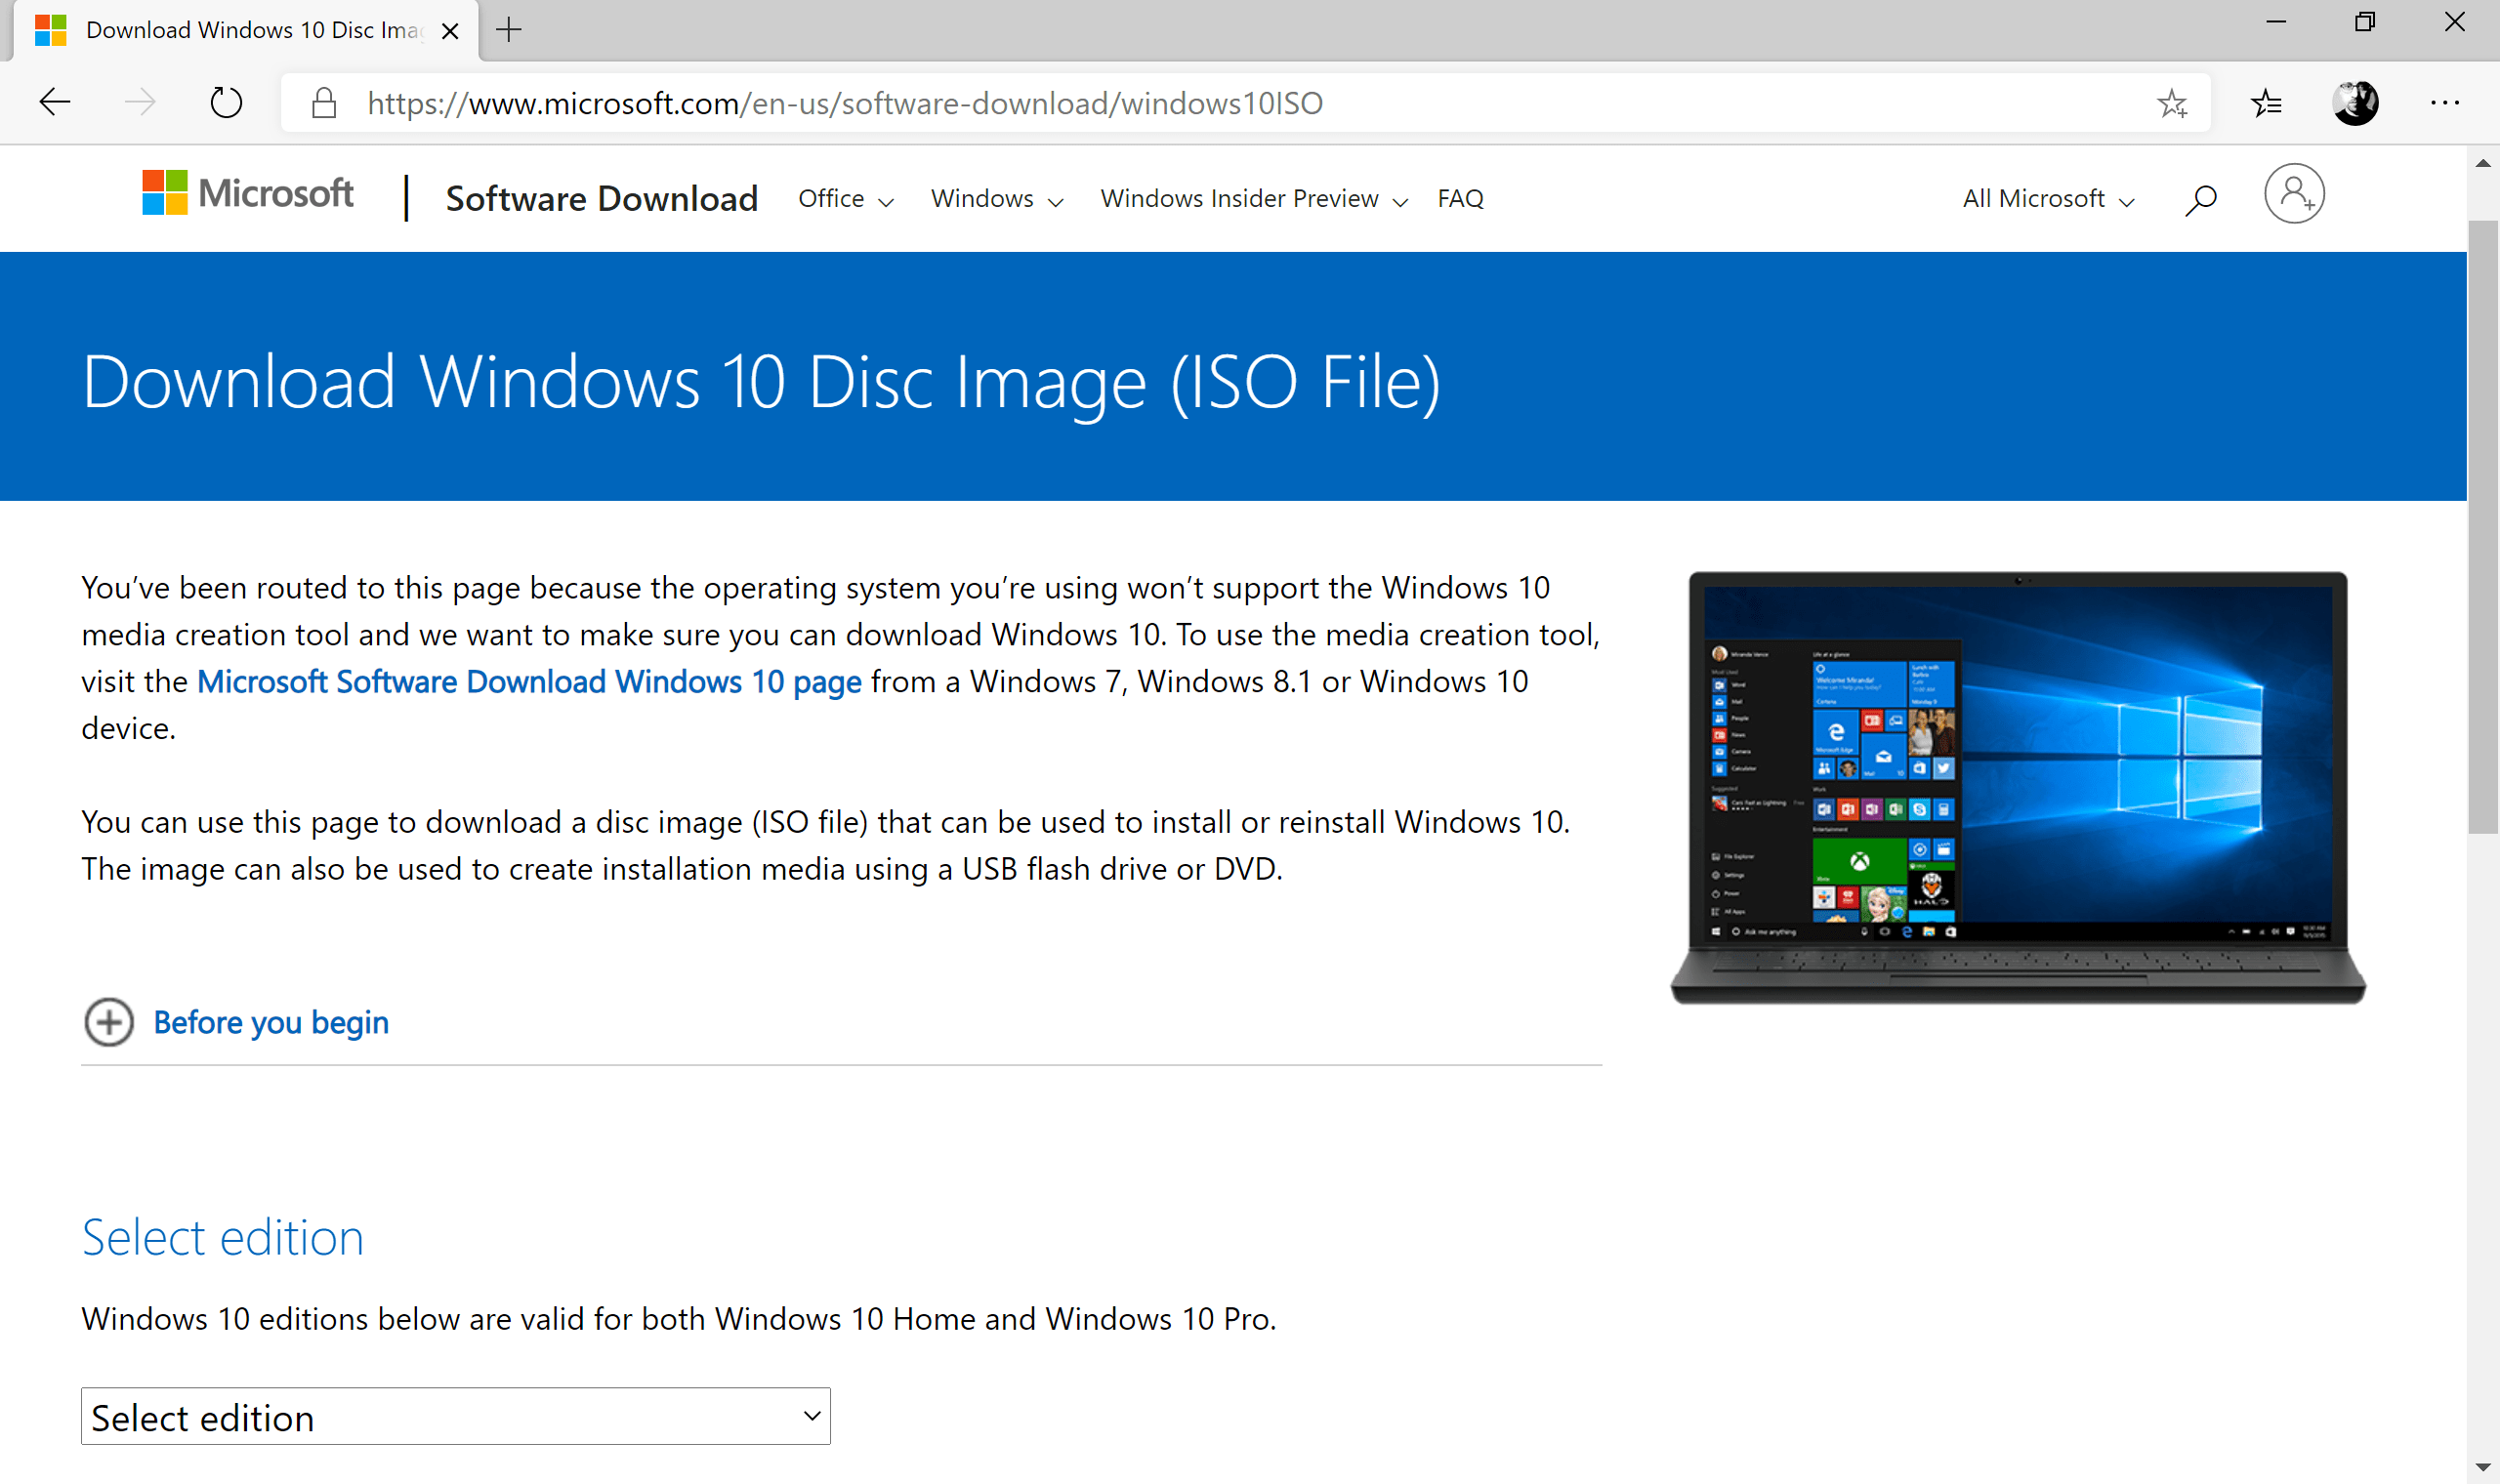 Edge Chromium Windows 10 iso download